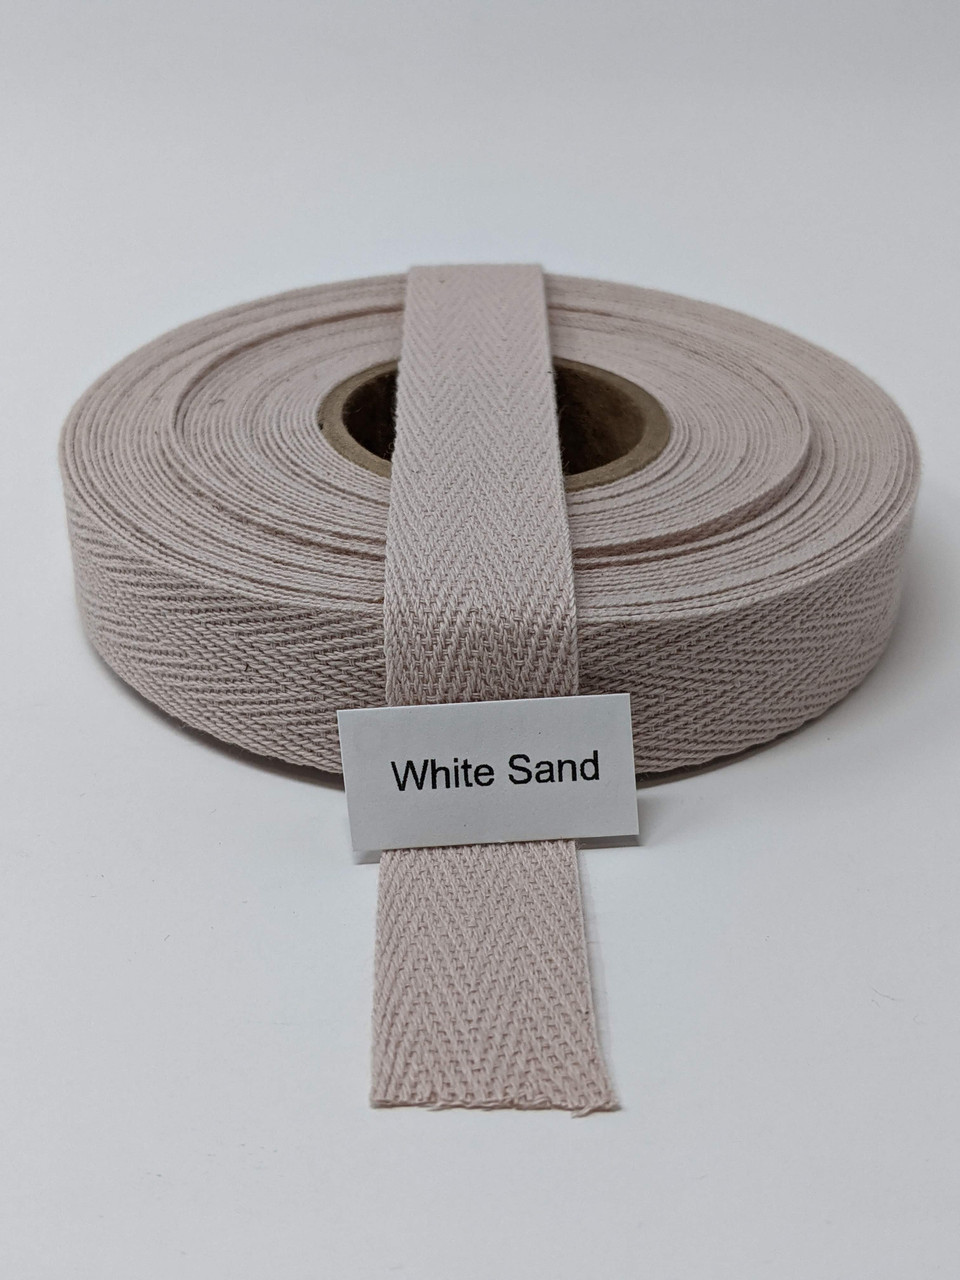 Cotton Twill Tape 3/4 White Sand, 10 yard roll